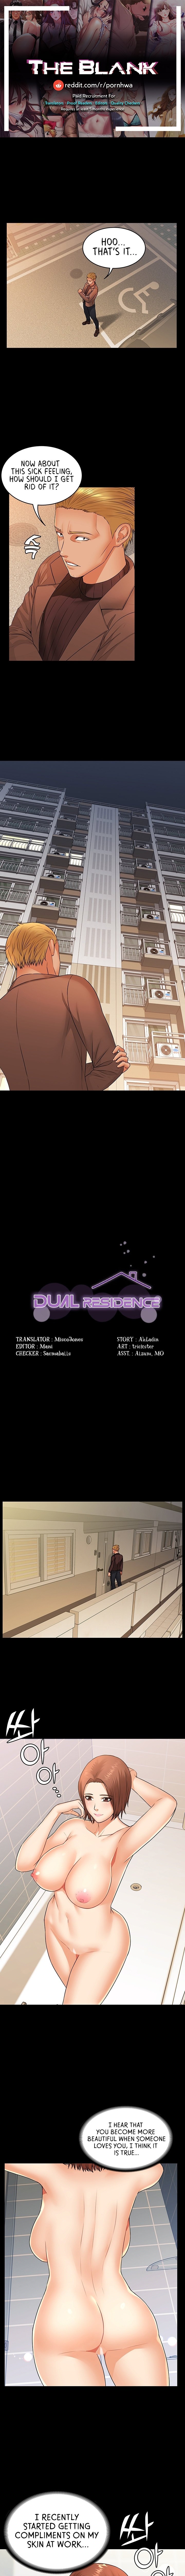 dual-residence-chap-26-0